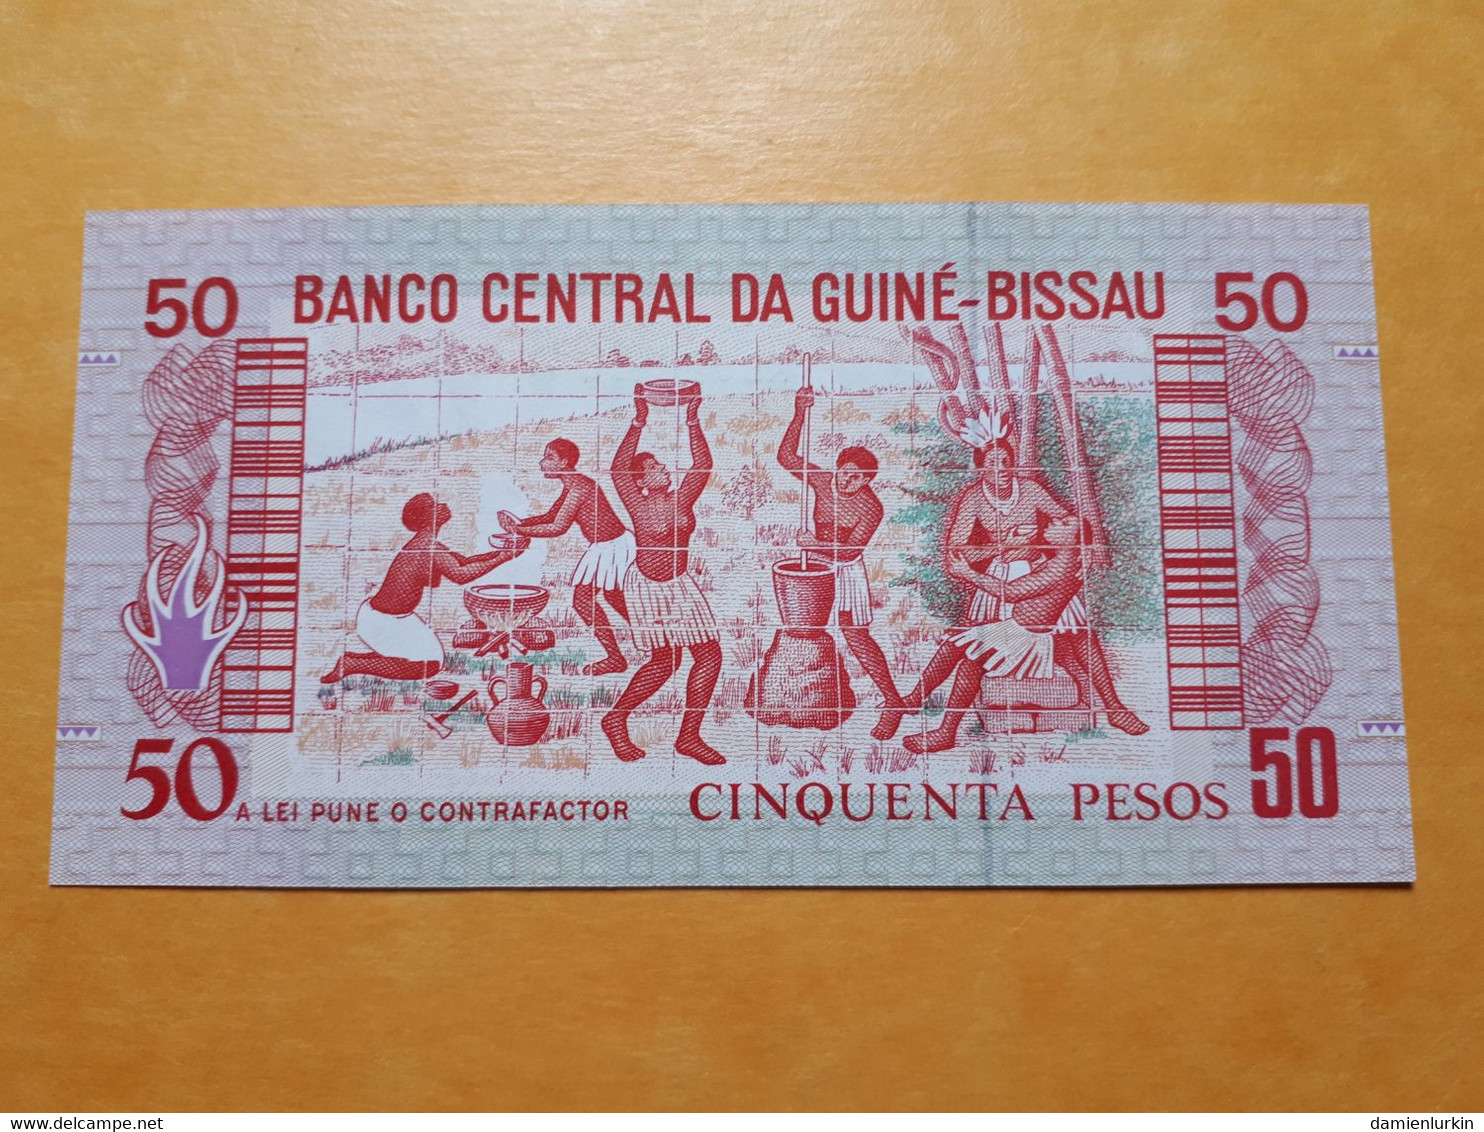 GUINEE-BISSAU 50 PESOS 1990 UNC - Guinea-Bissau